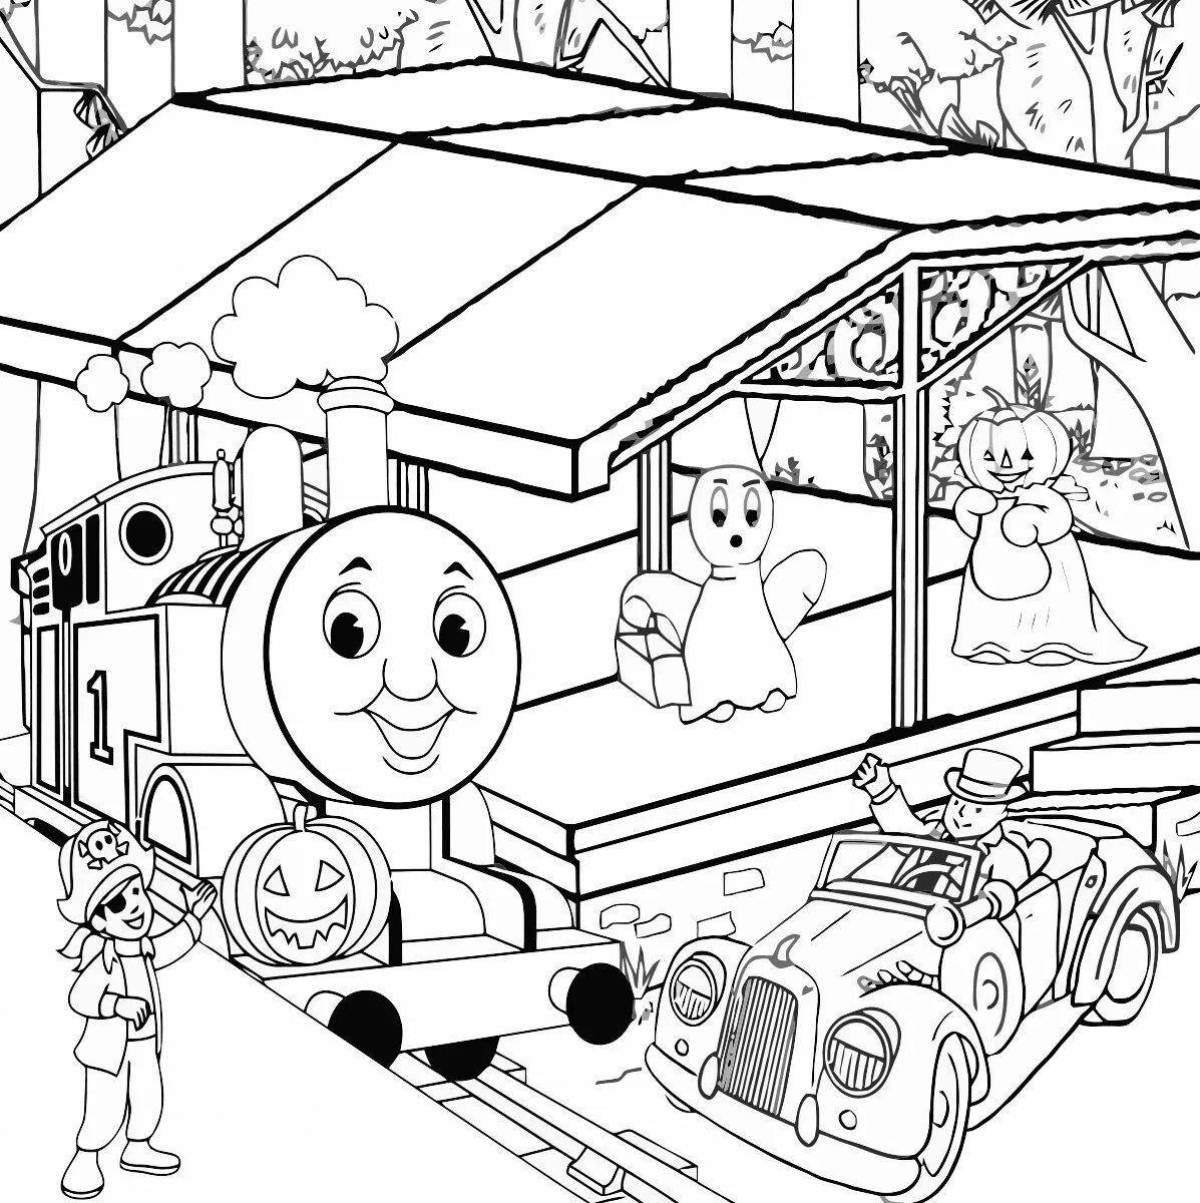 Thomas' incredible train coloring book for kids